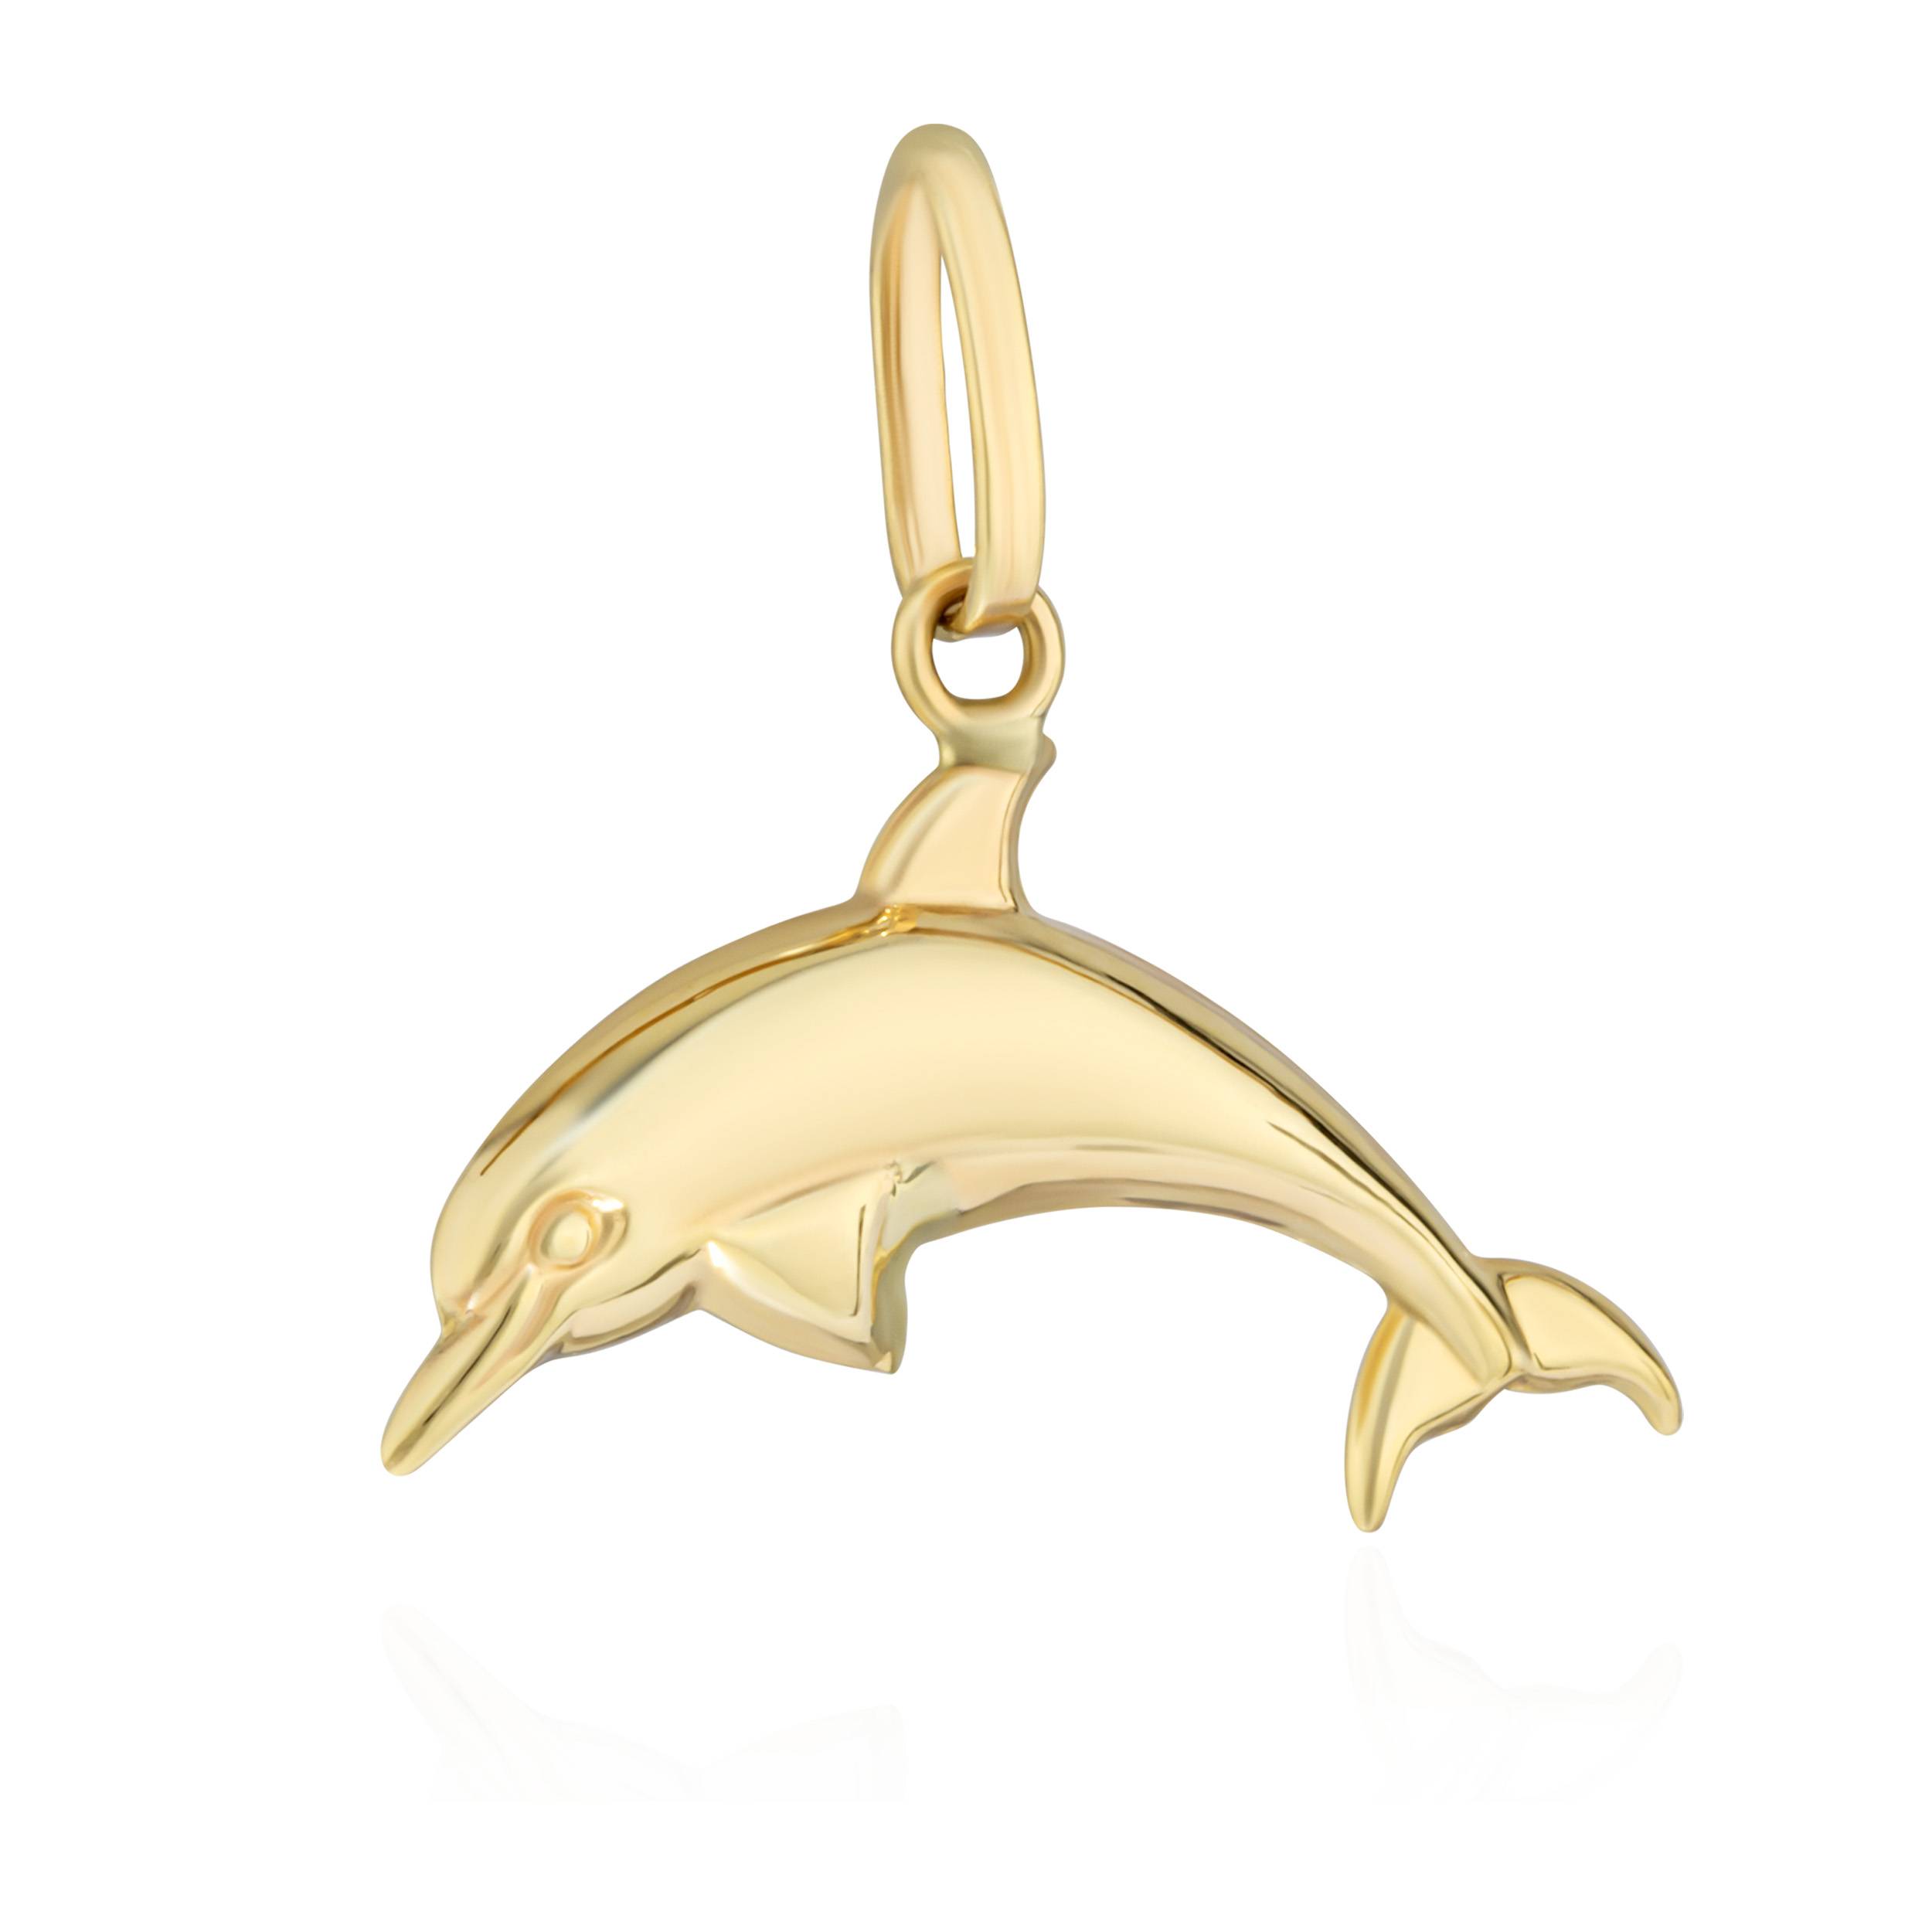 Kettenanhnger Delfin 333 Gelb gold 8 Karat 18x10mm Talisman Amulett Anhnger 